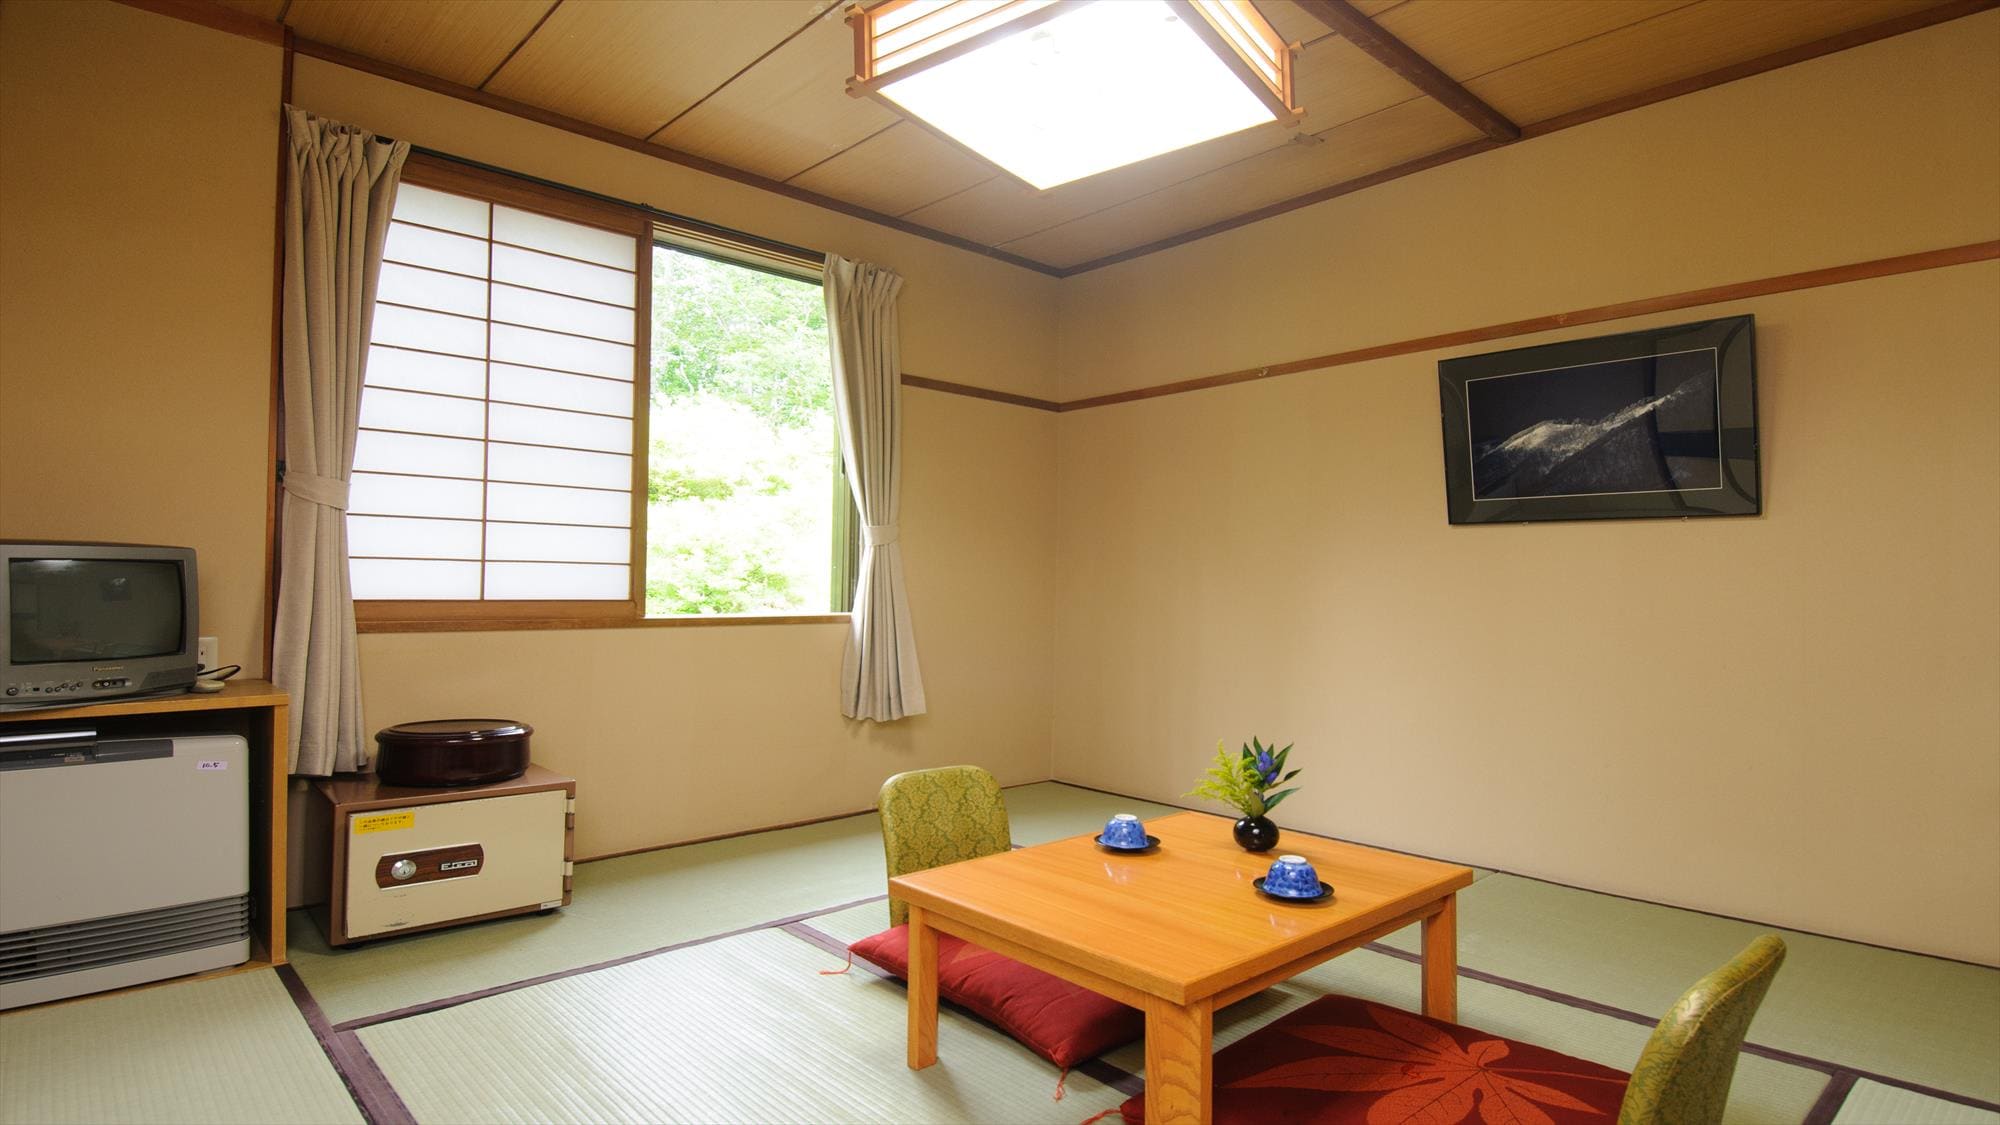  ◆ [East Building] Japanese-style room 8 tatami mats